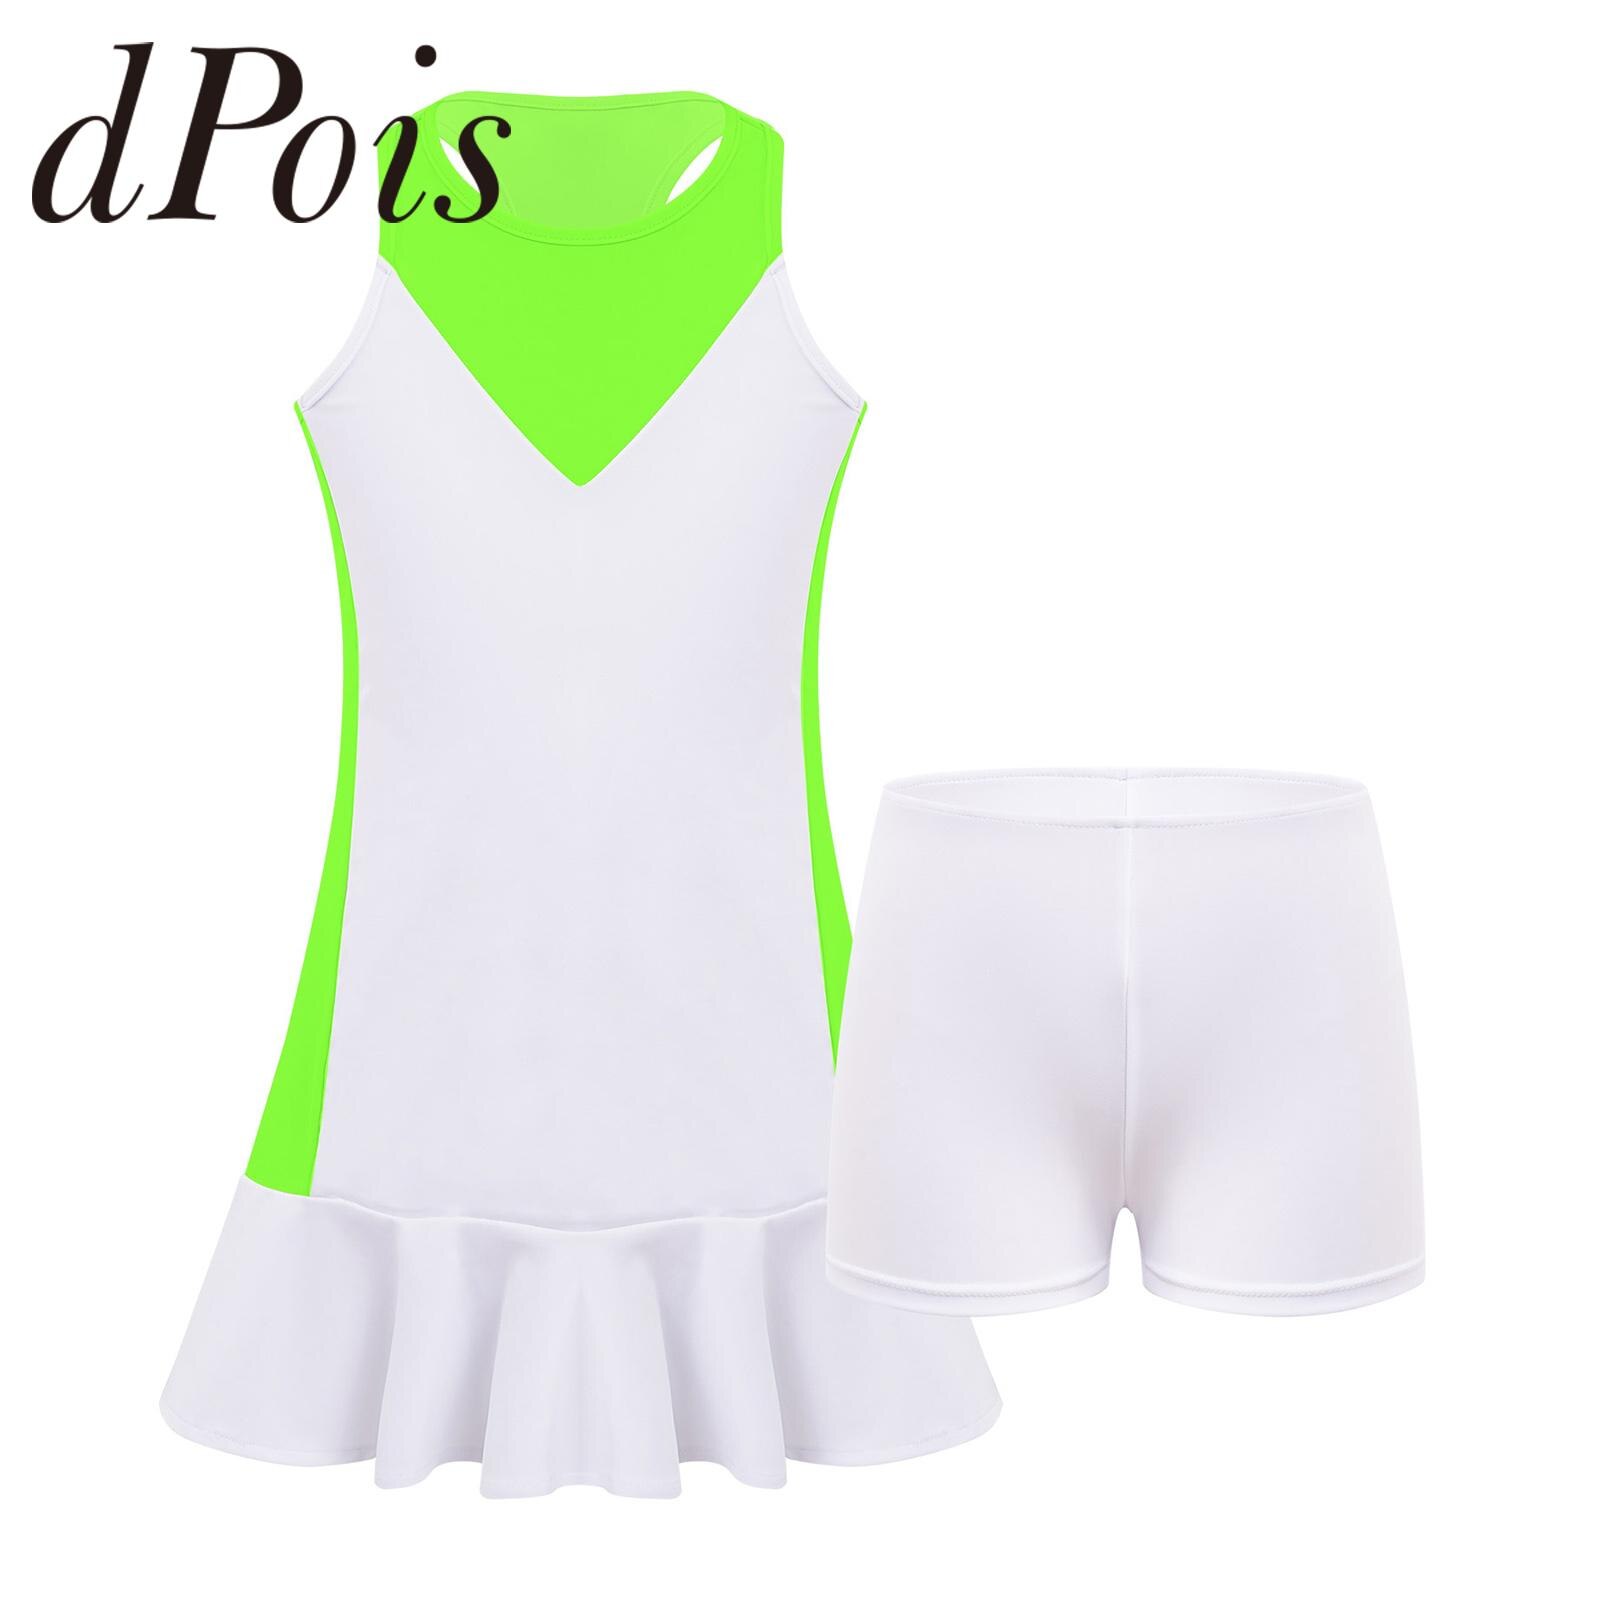 DPOIS Kids Girls Sleeveless Sports Dress Workout Tennis Golf Outfit White 6